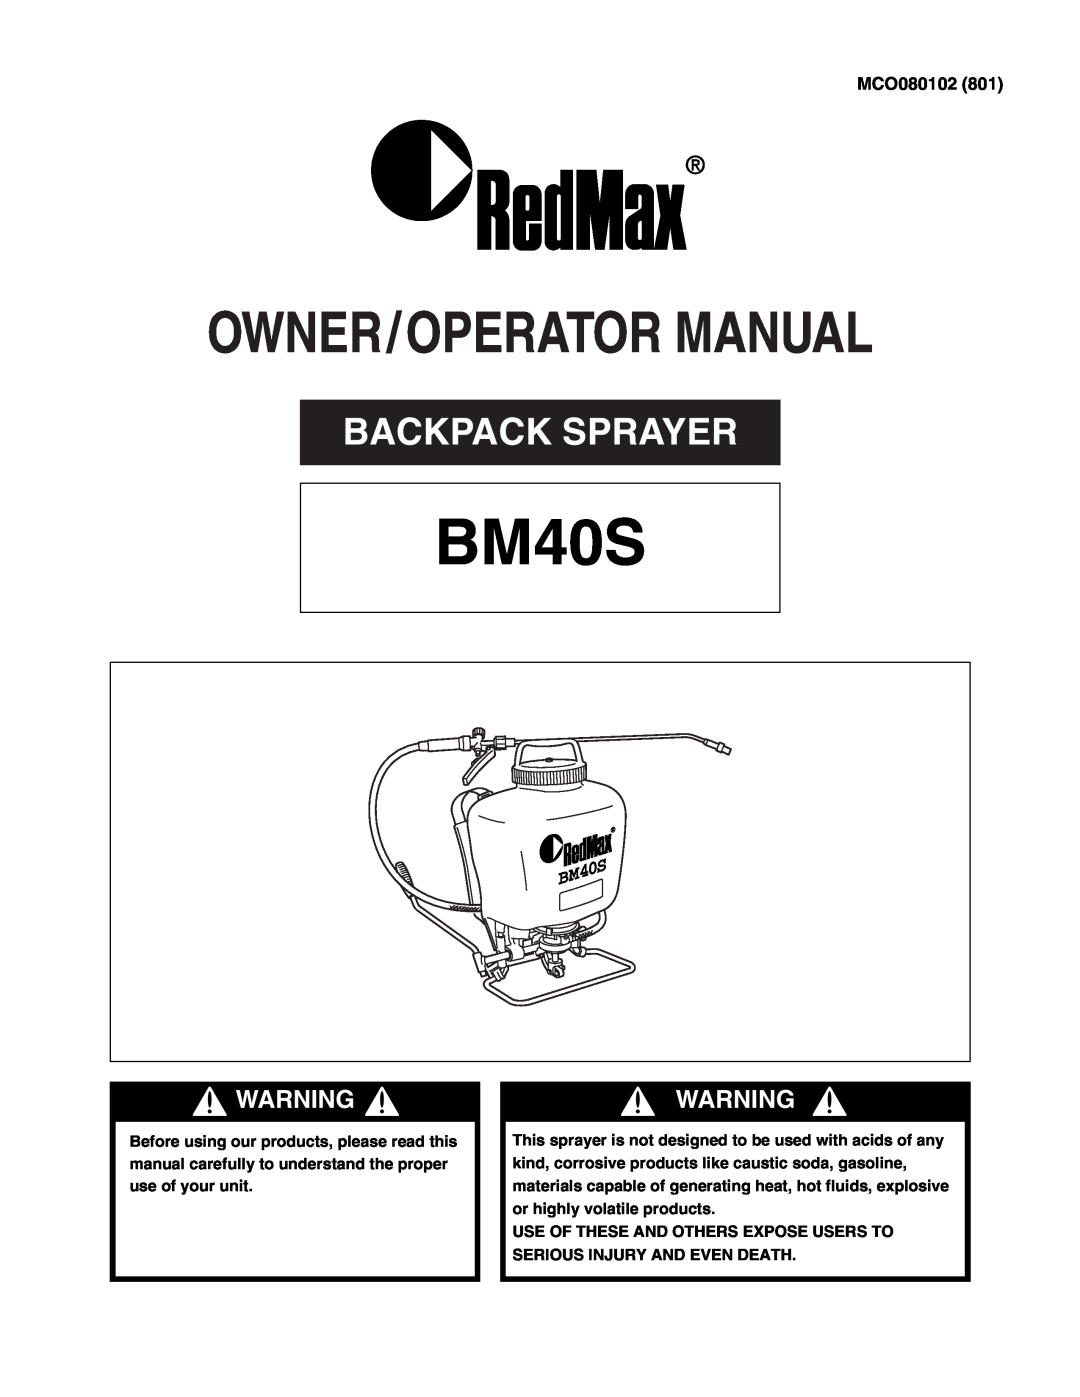 Zenoah BM40S manual Owner/Operator Manual, Backpack Sprayer, MCO080102 